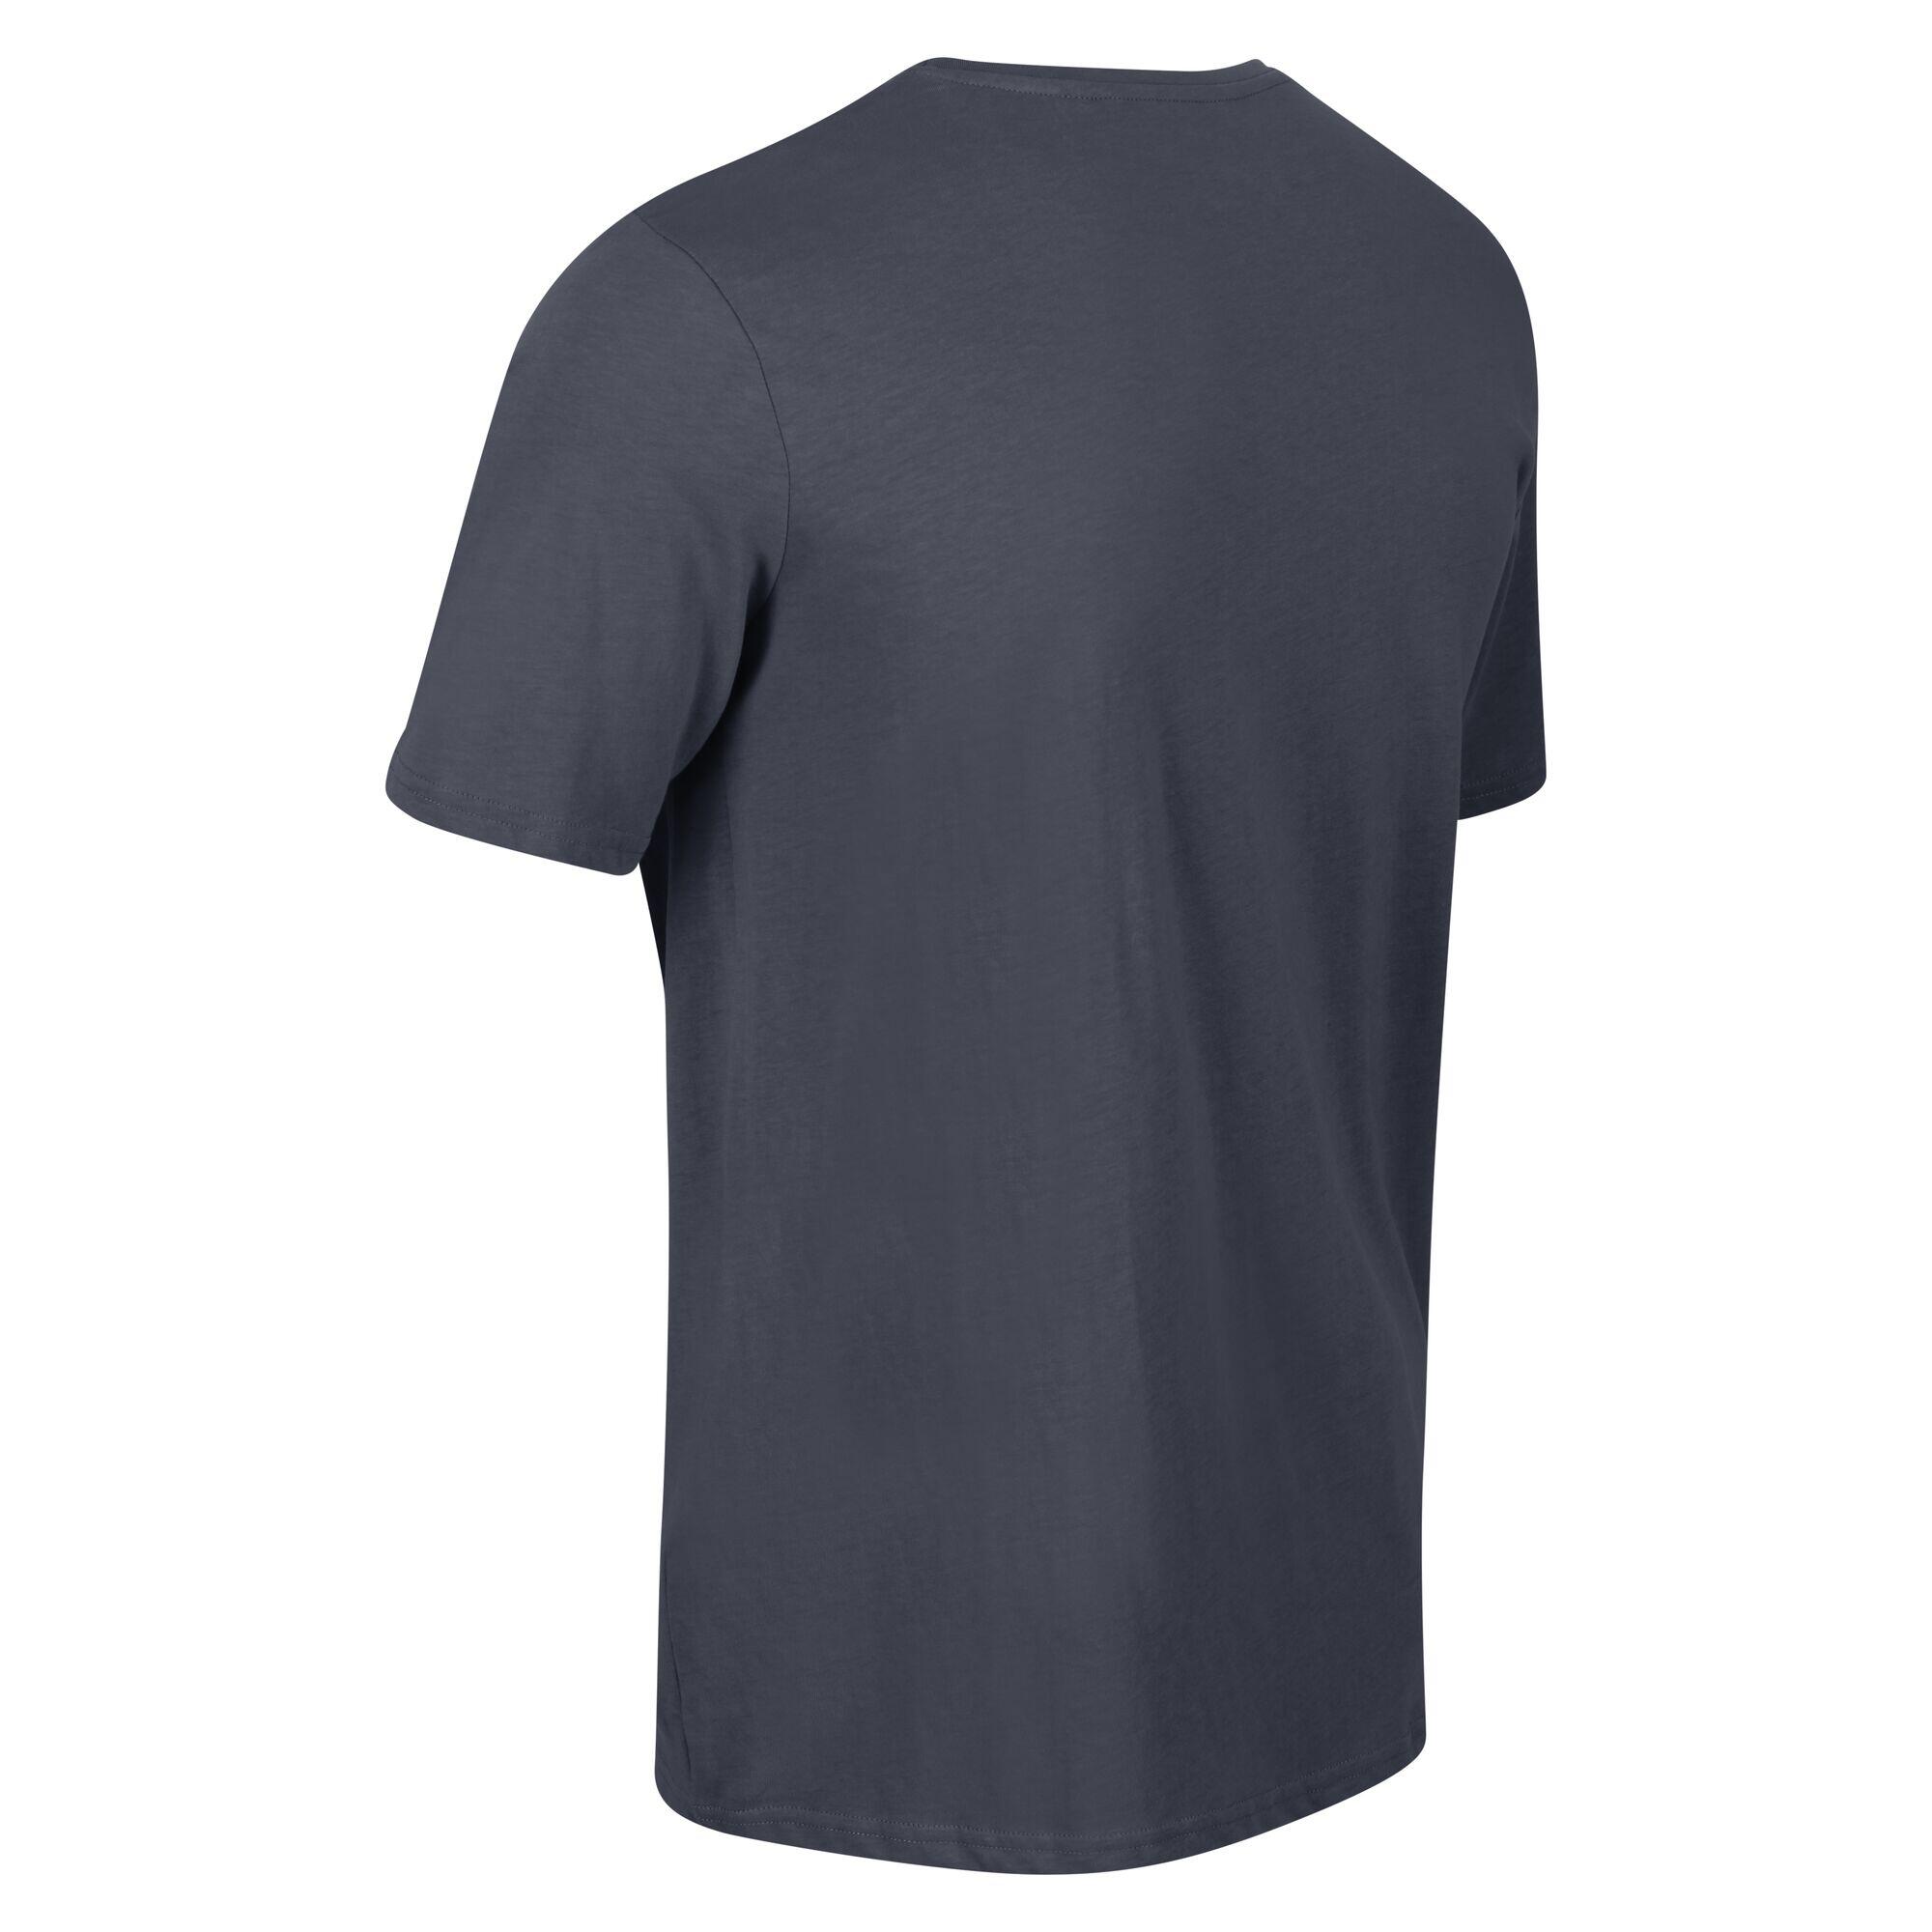 Tait Men's Walking Short Sleeve T-Shirt - Grey 5/5